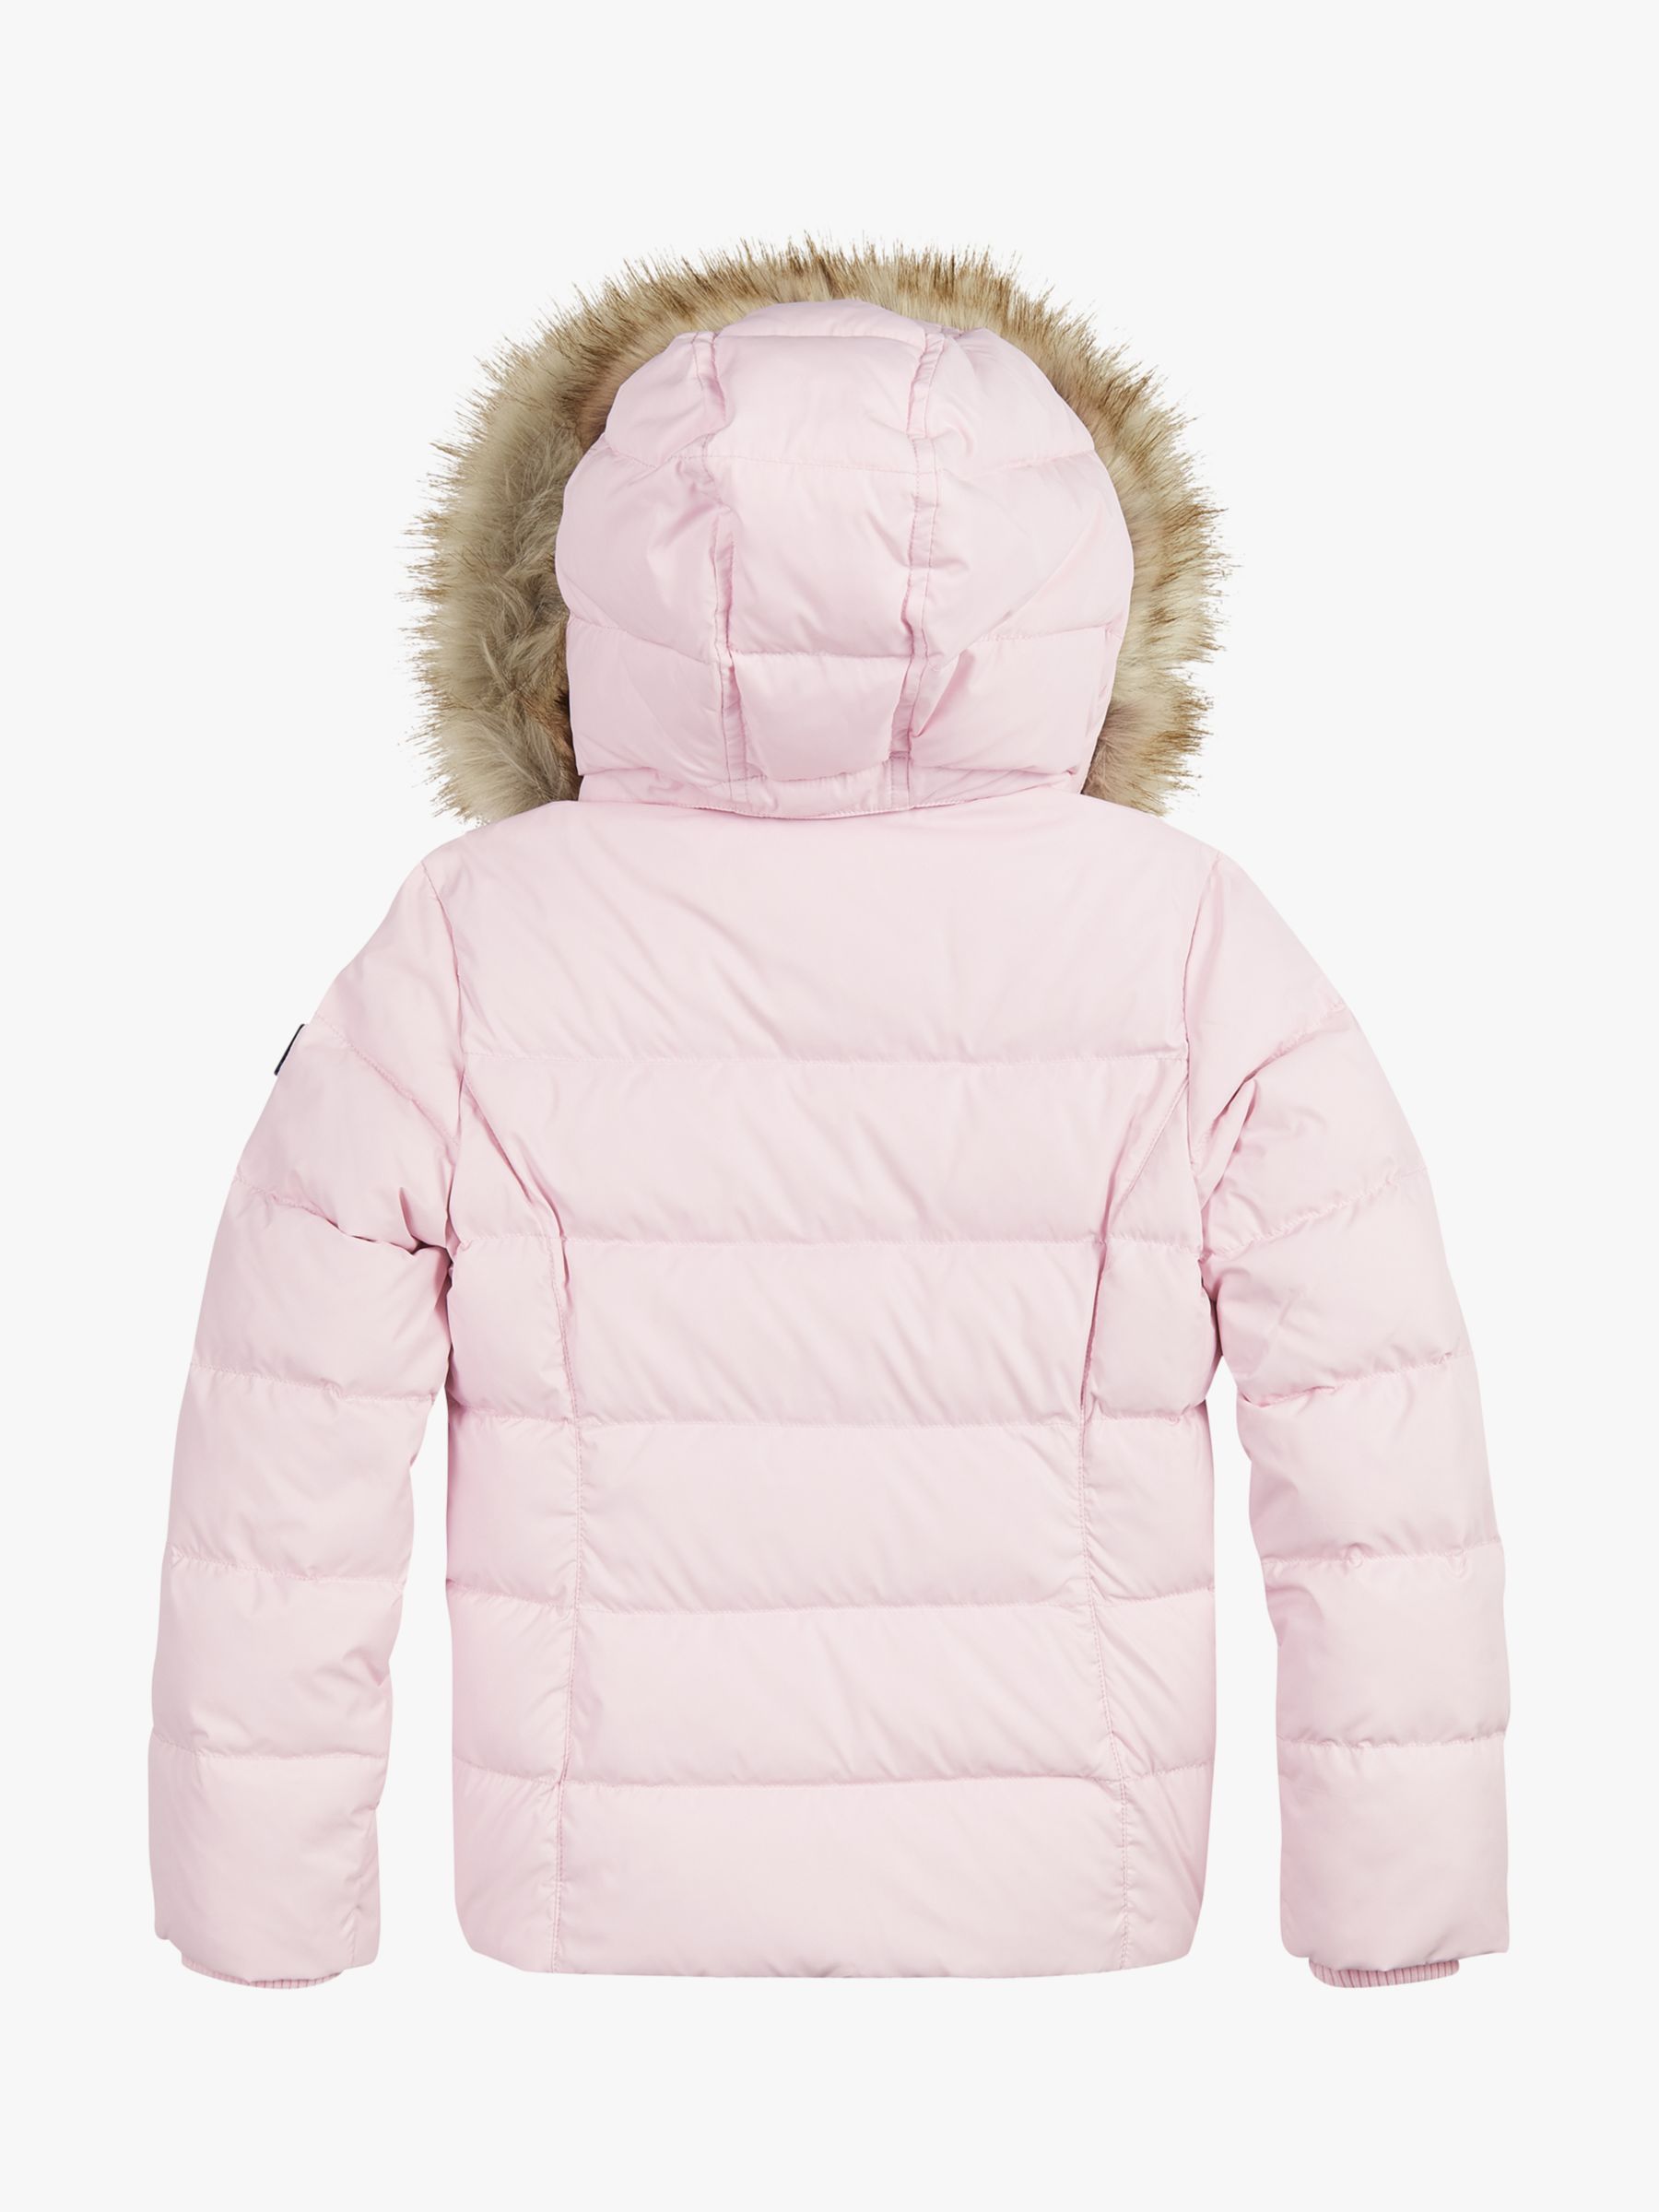 Tommy Hilfiger Kids' Essential Jacket, Pink